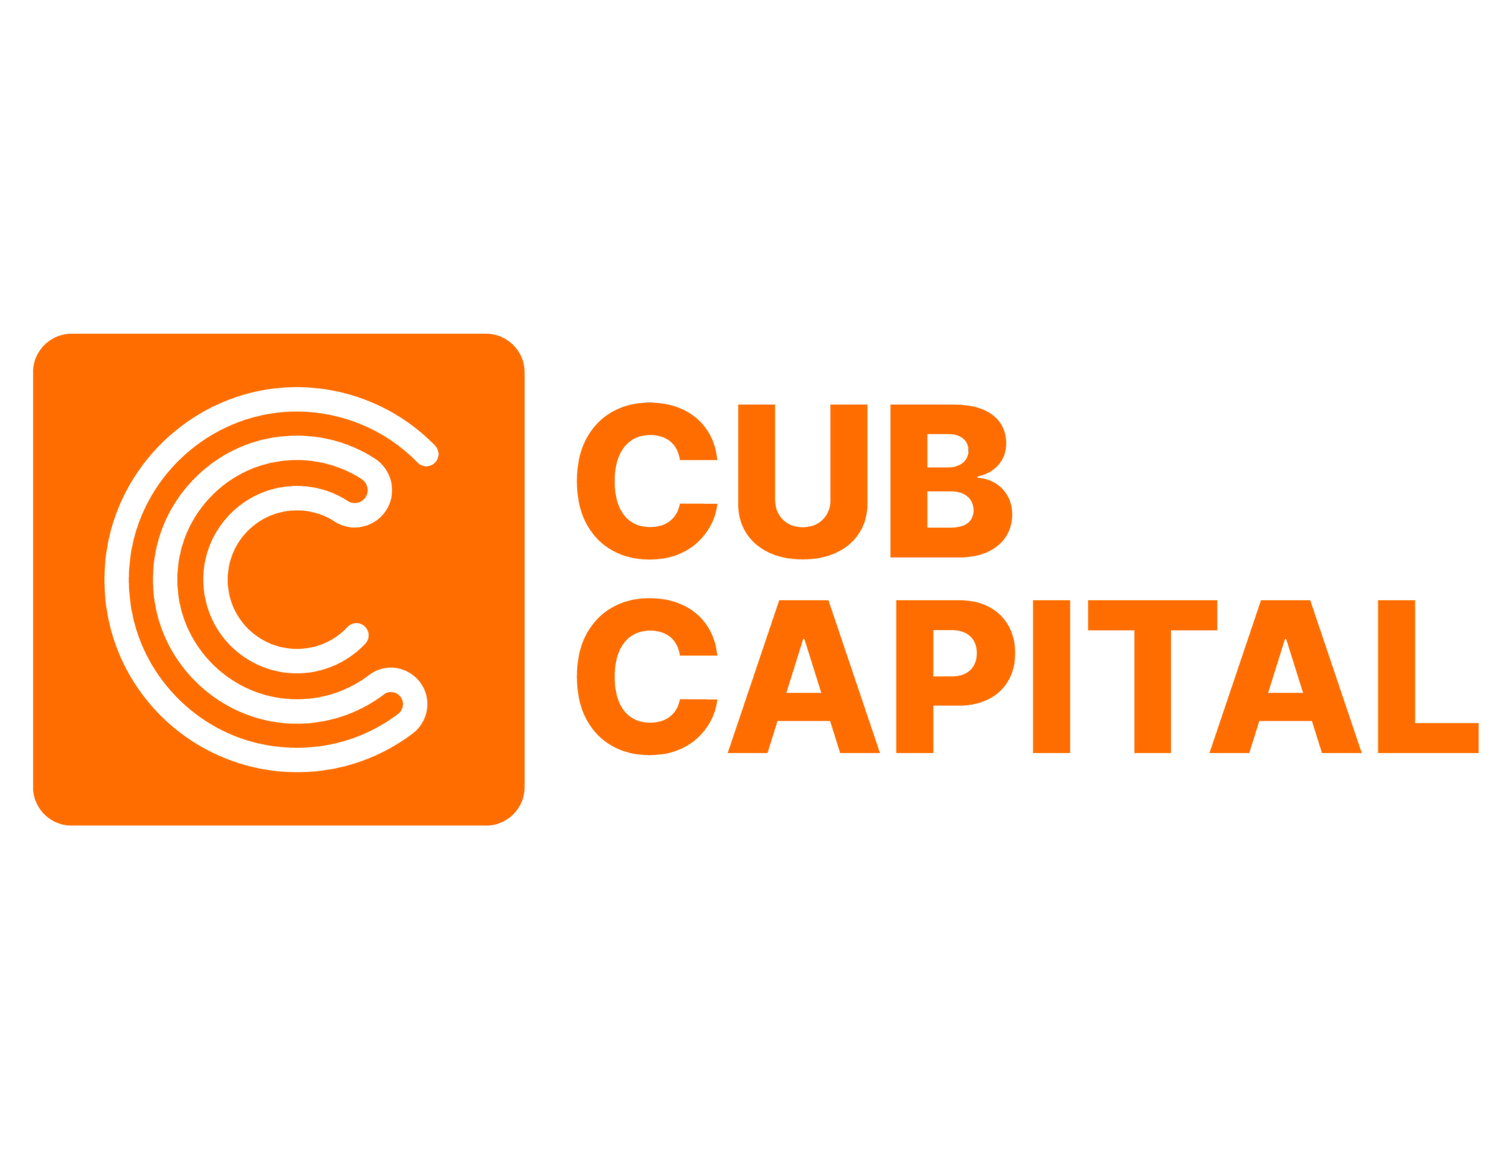 Cub Capital